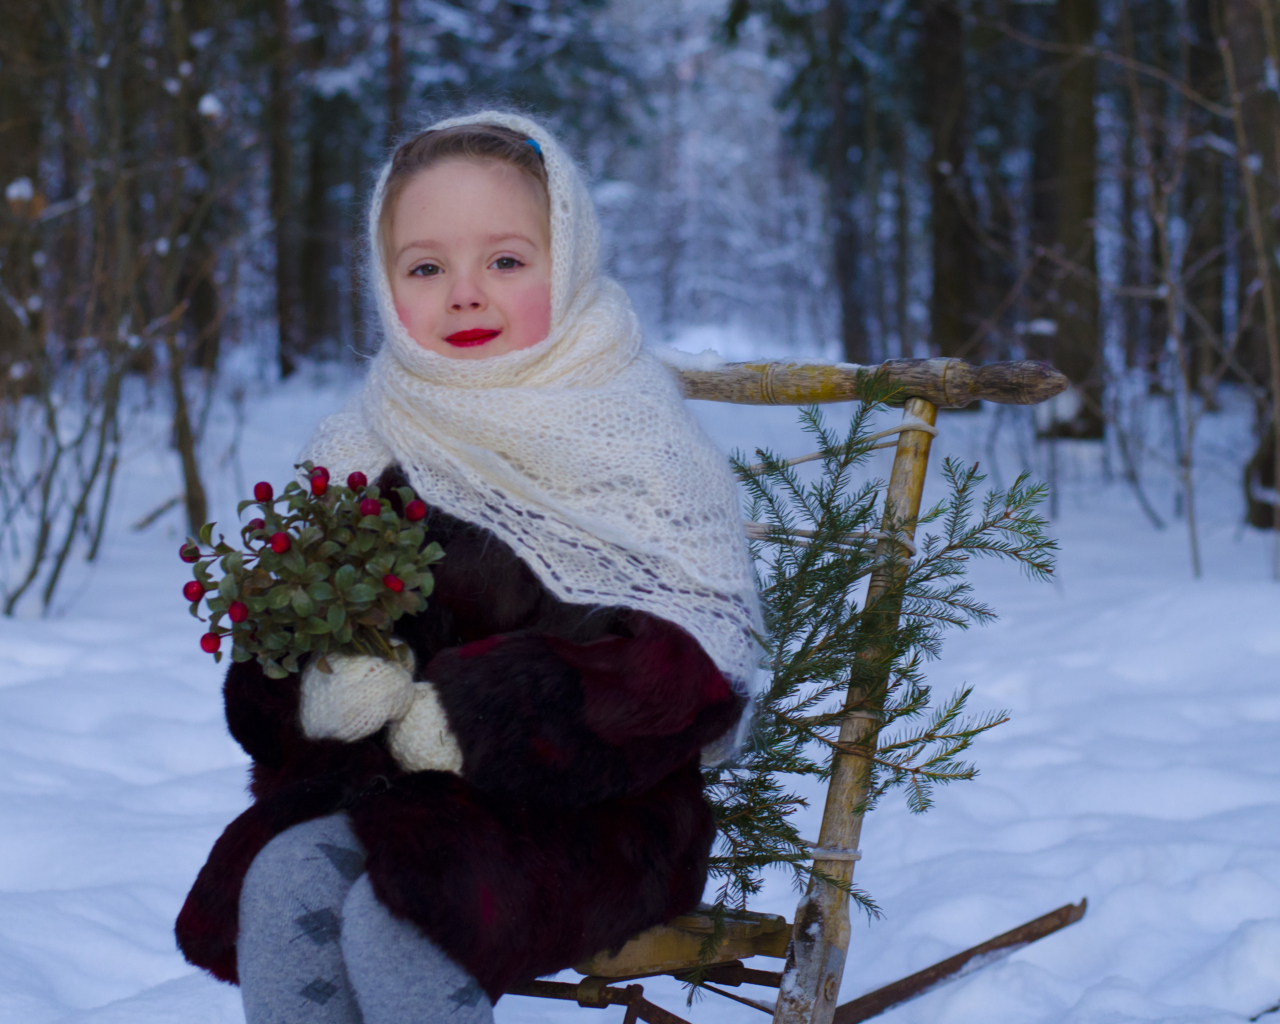 Das Little Girl In Winter Outfit Wallpaper 1280x1024